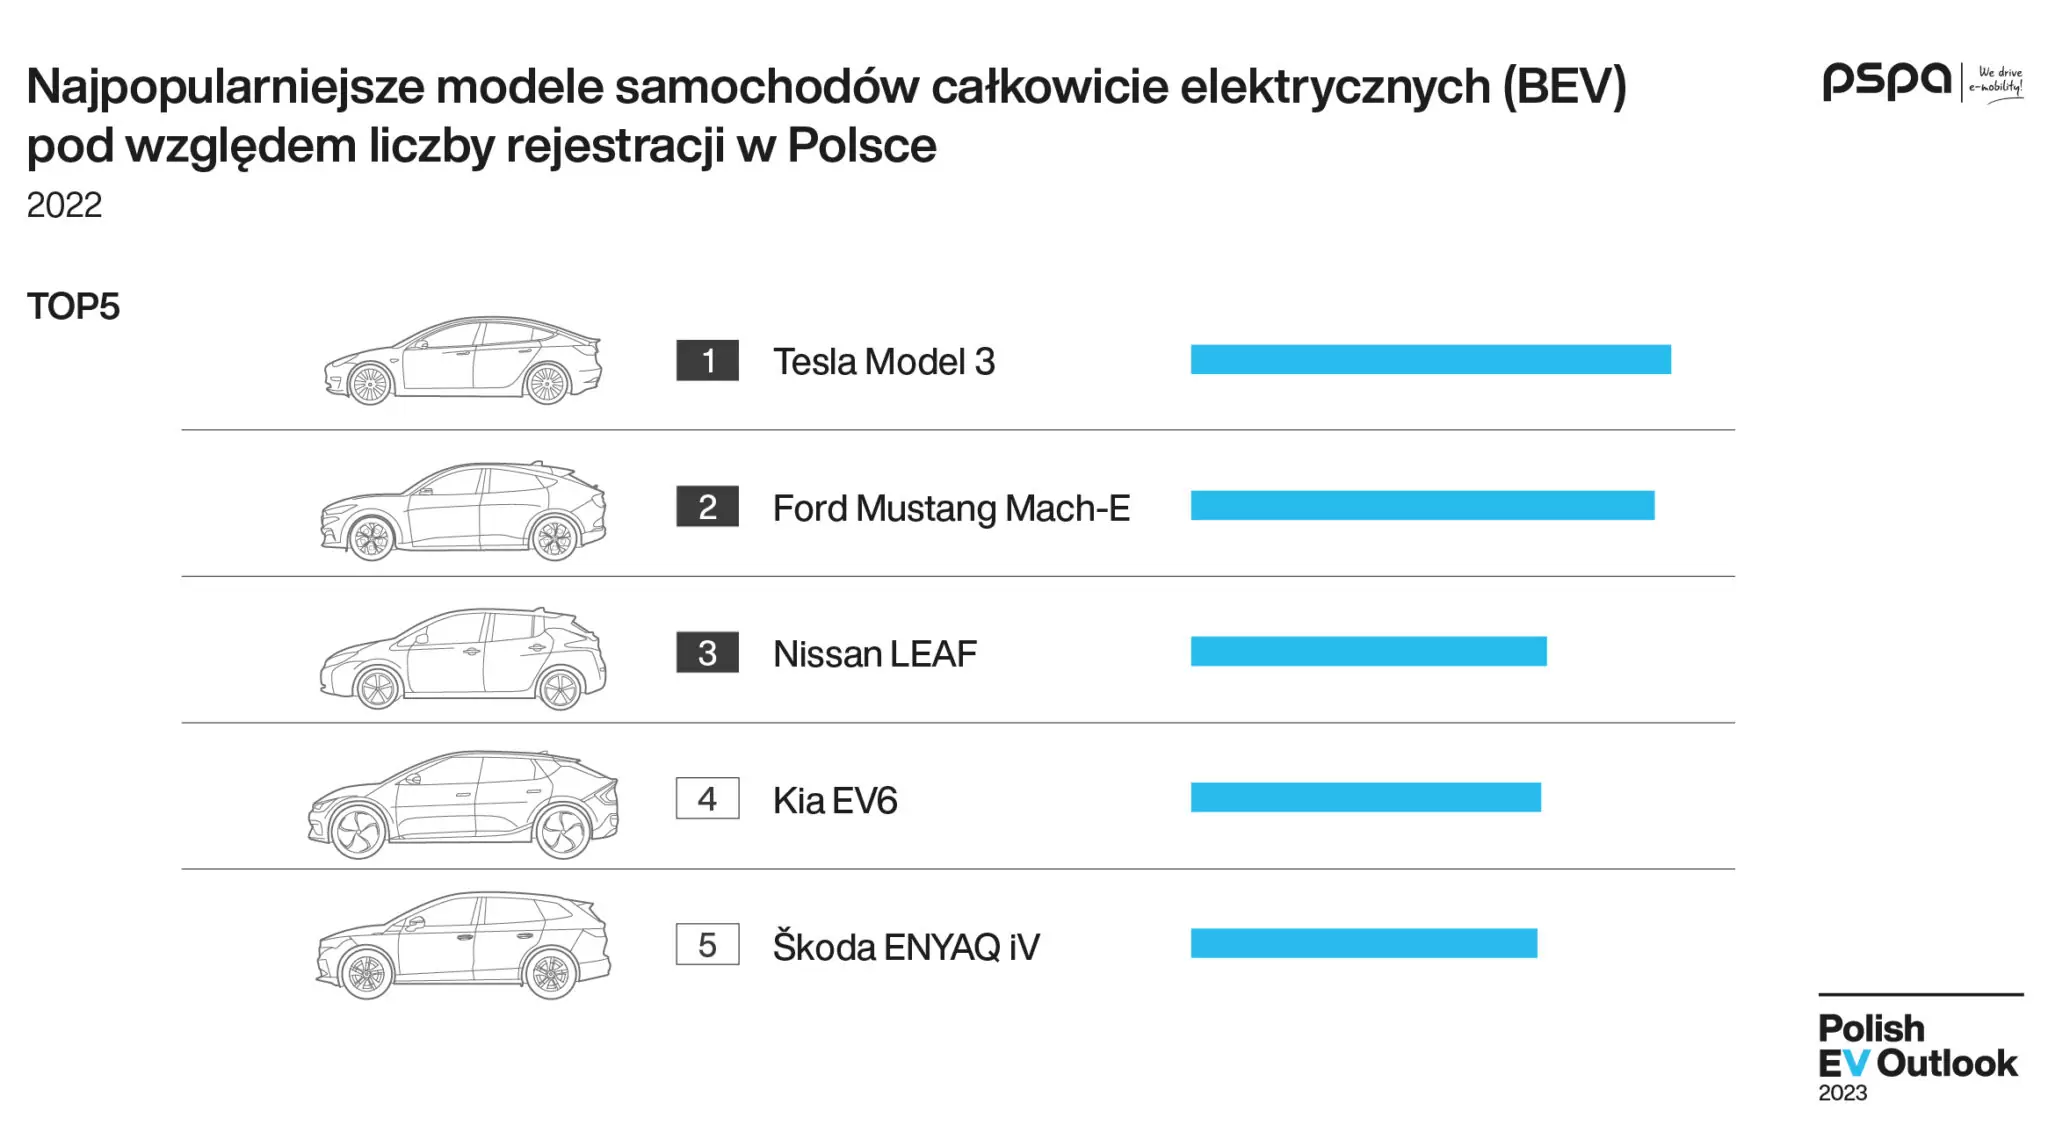 0002 Polish EV Outlook 2023 wyd I komunikat grafika pojazdy 05 1 e1680151052573 2048x1125.jpg